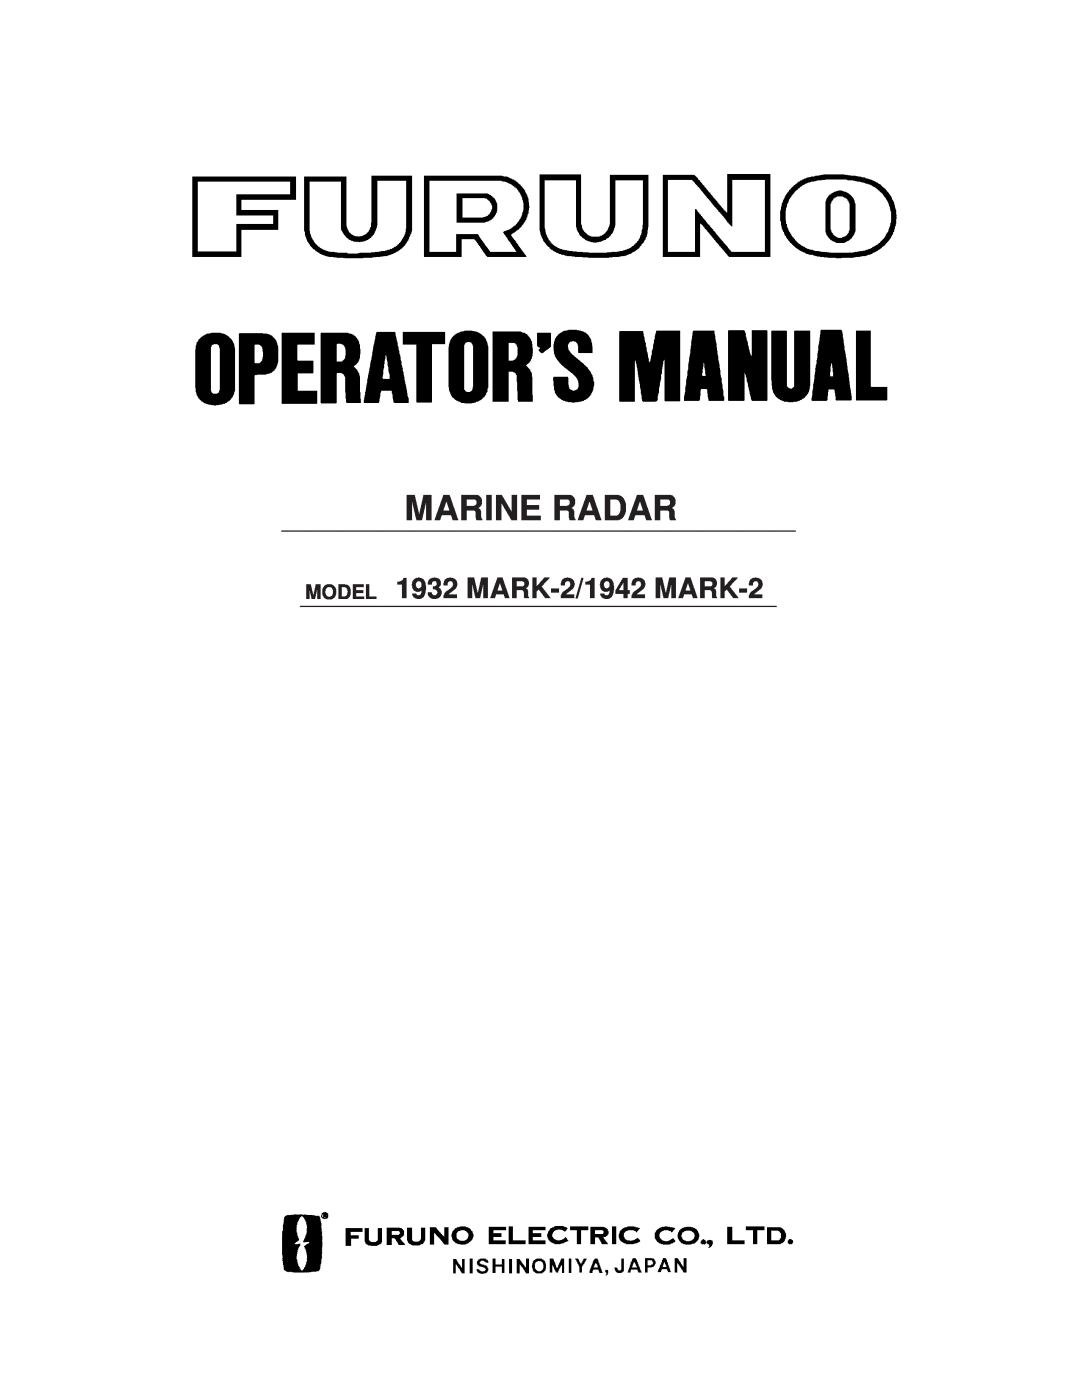 Furuno manual Marine Radar, MODEL 1932 MARK-2/1942 MARK-2 